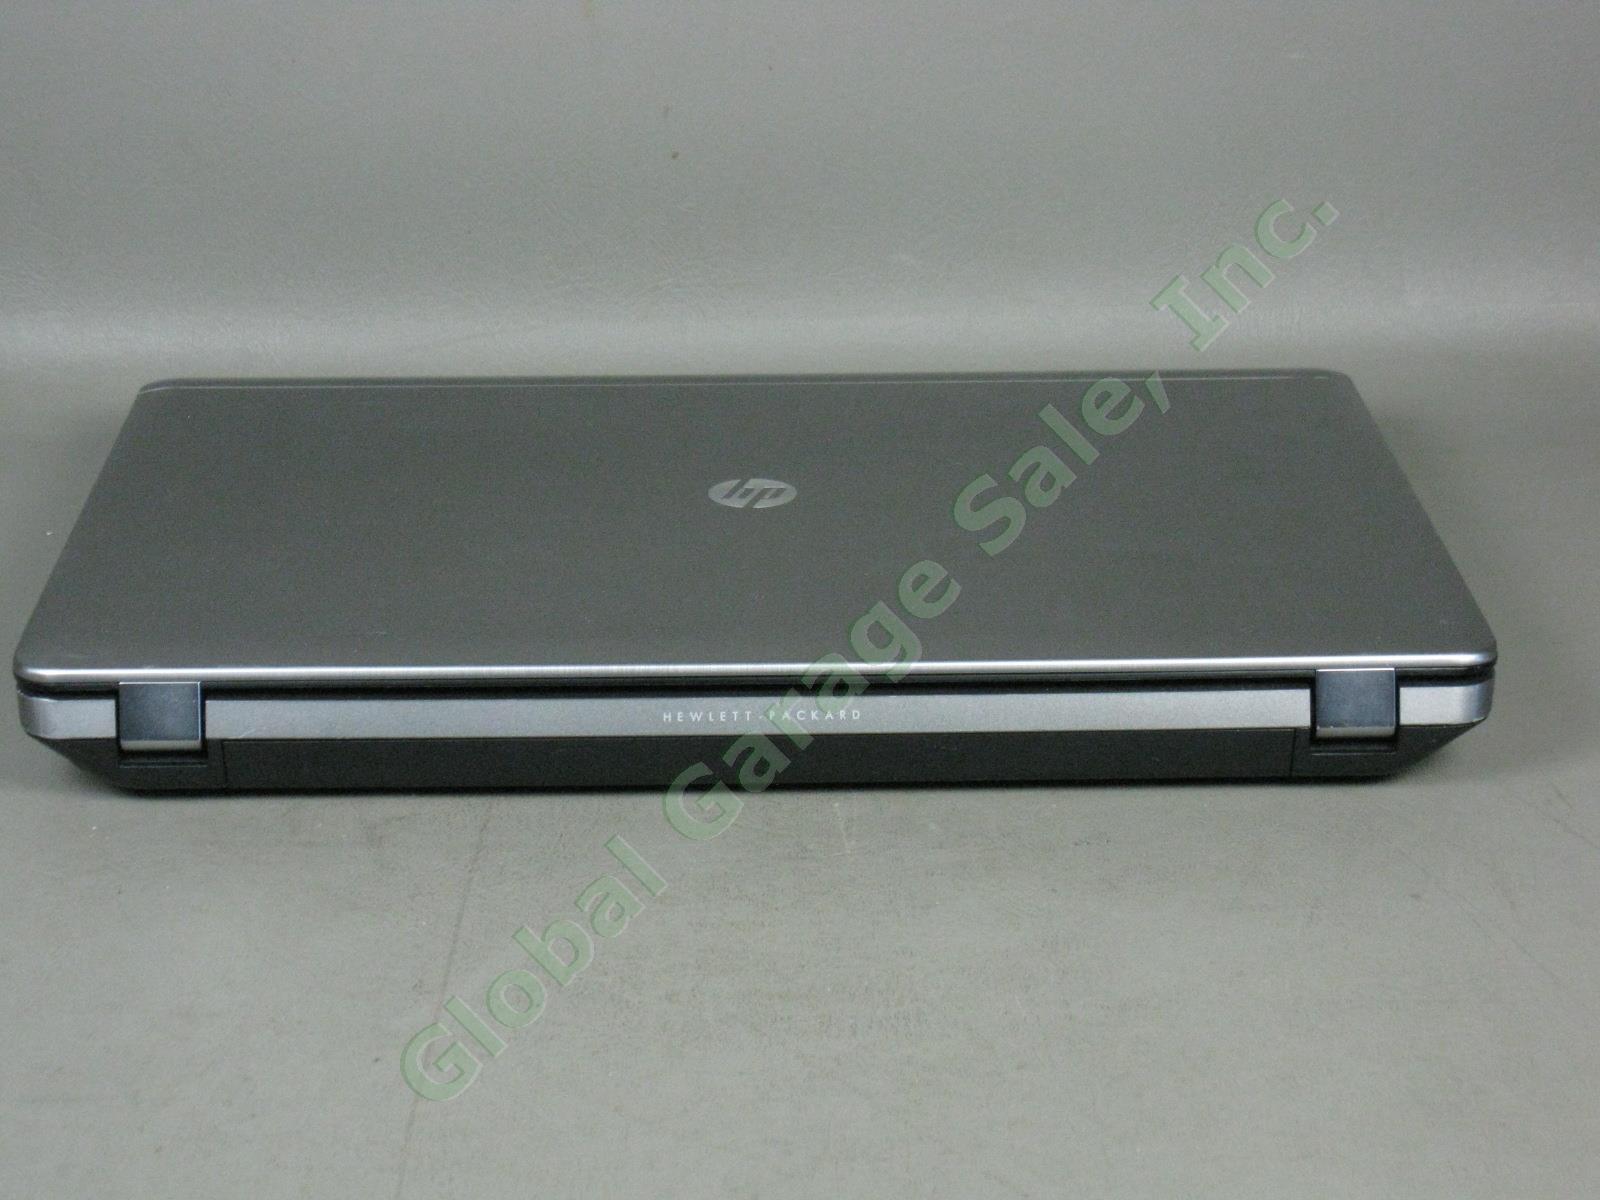 HP ProBook 4540s Laptop Computer Intel i5 2.60GHz 300GB HDD 4GB RAM Win 10 Pro 5